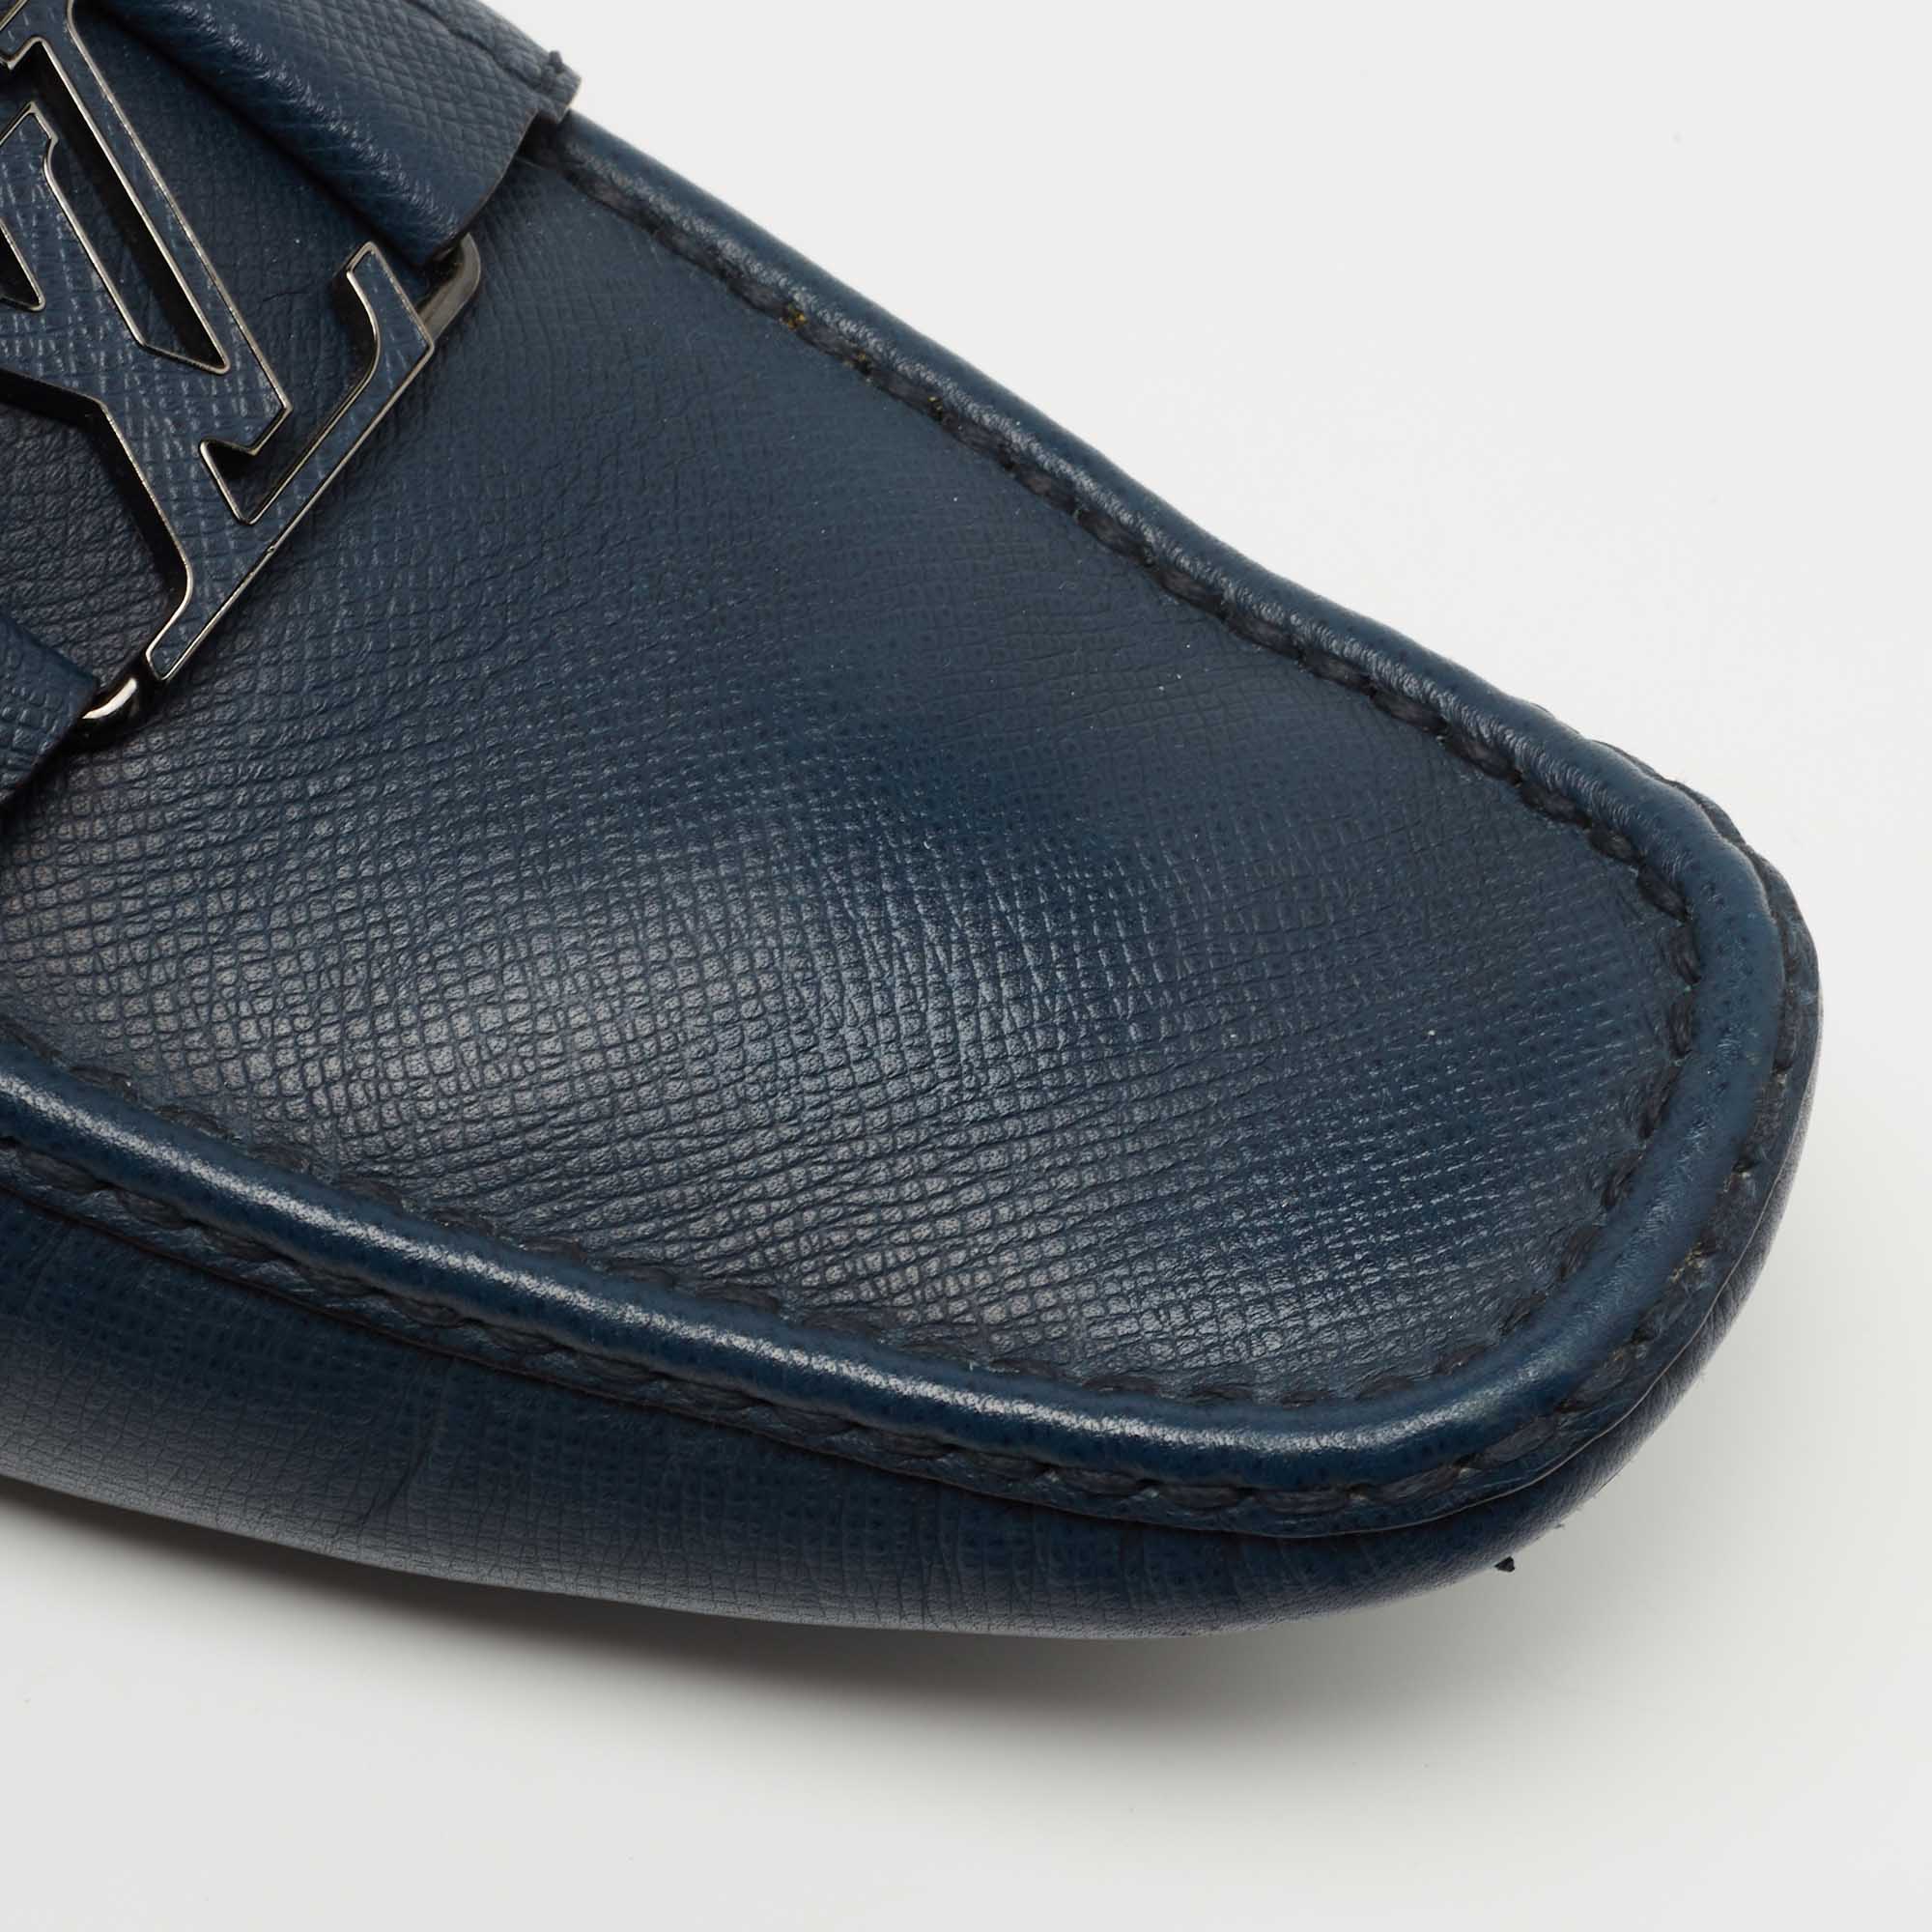 Authentic Louis Vuitton Monte Carlo Blue Leather Mens Loafer US9.5 EU42.5  UK8.5